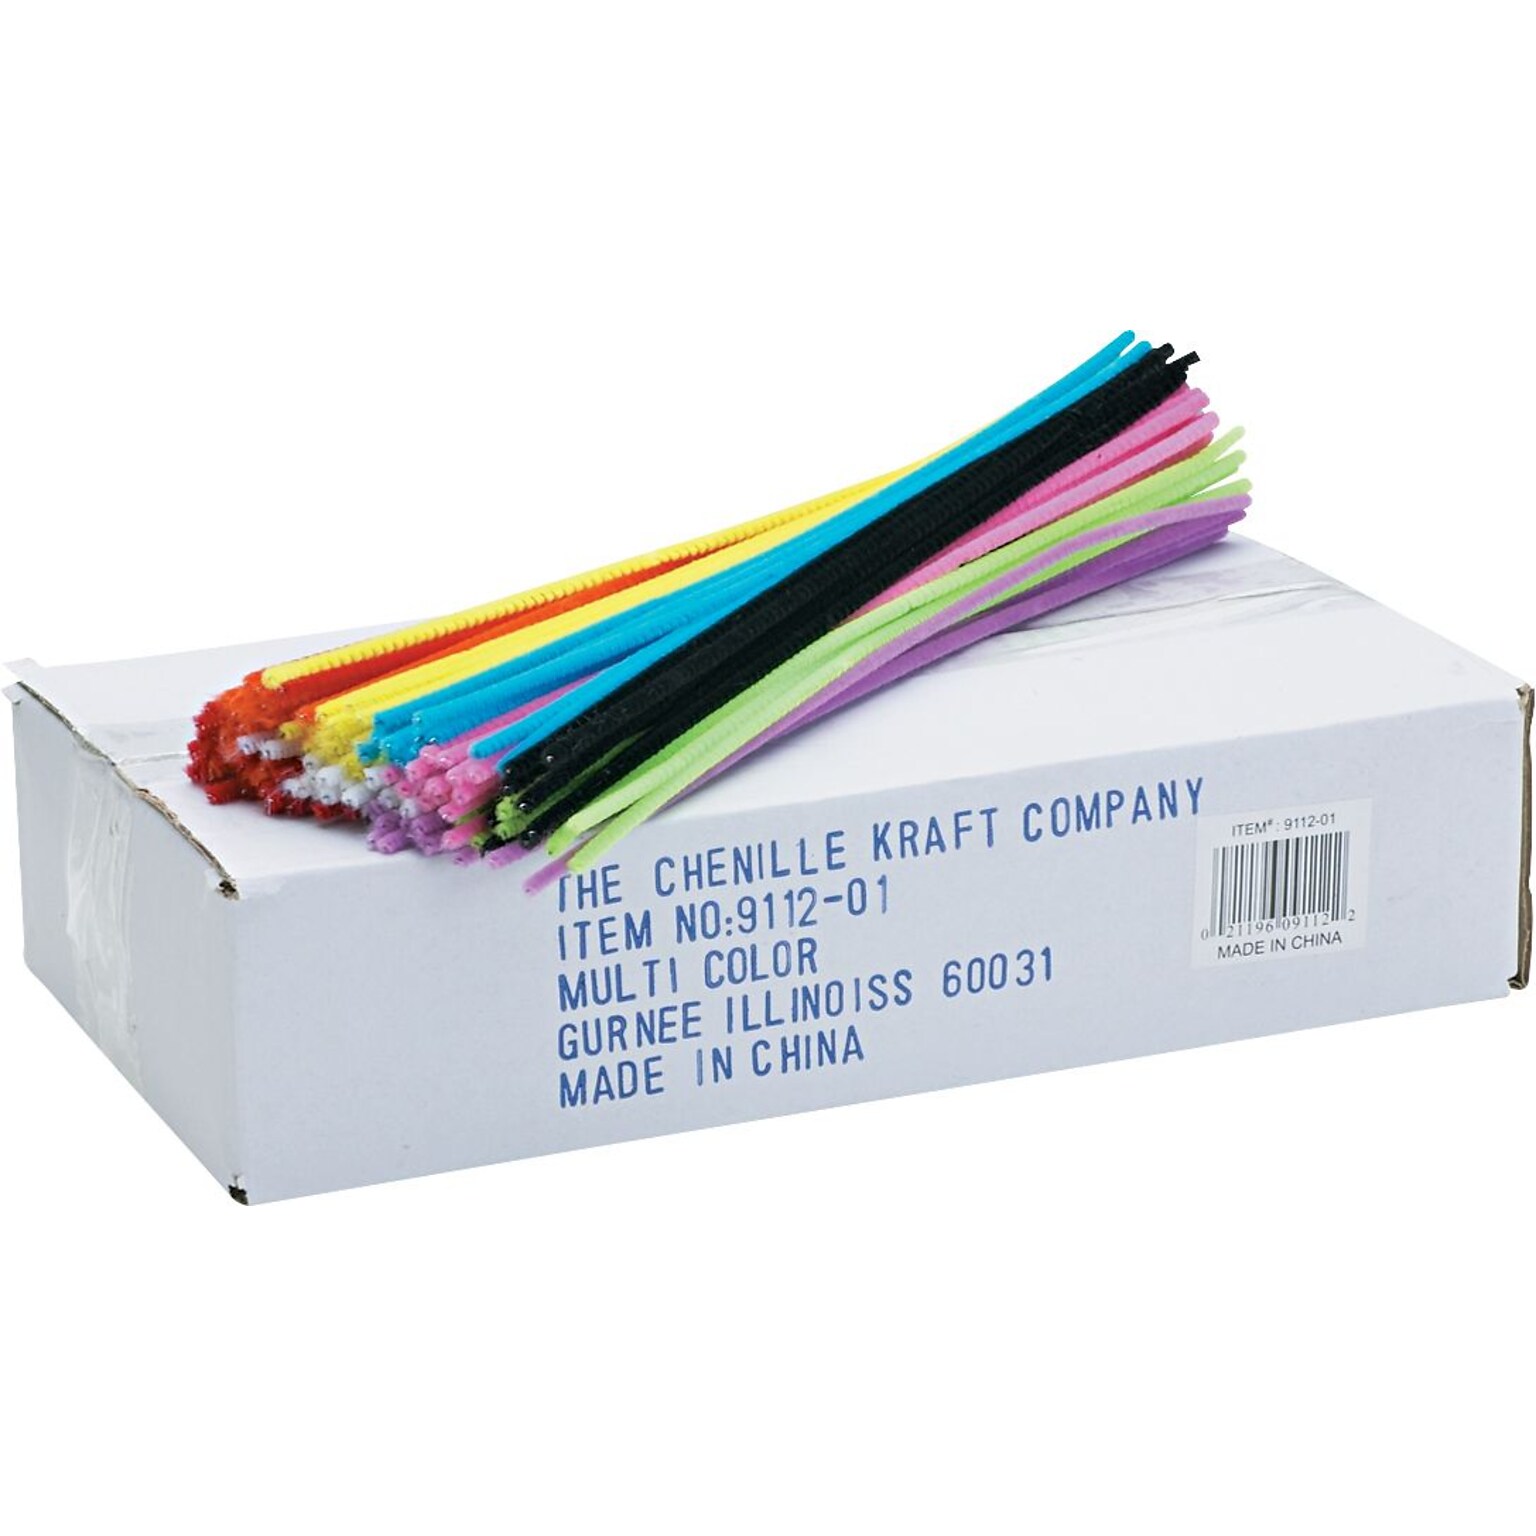 Chenille Kraft Company Regular Stems, Classroom Pack, Assorted Colors, Craft Supplies, 12 x 4mm, 1,000 Stems/Pk (911201X)